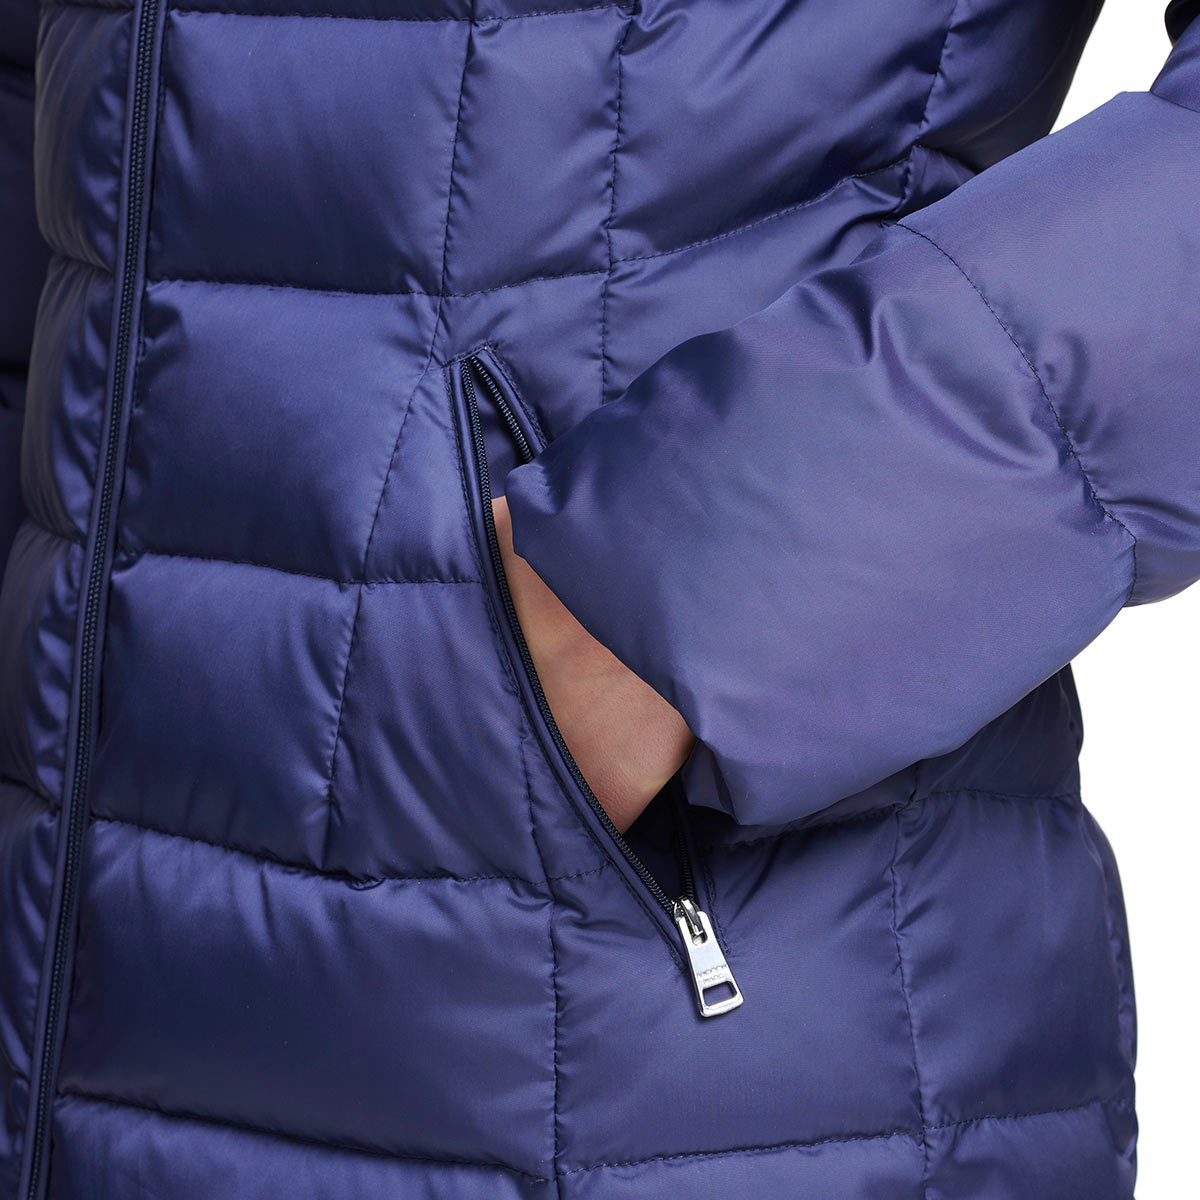 Andrew Marc Women's Short Down Jacket with Hood in Blue | Costco UK